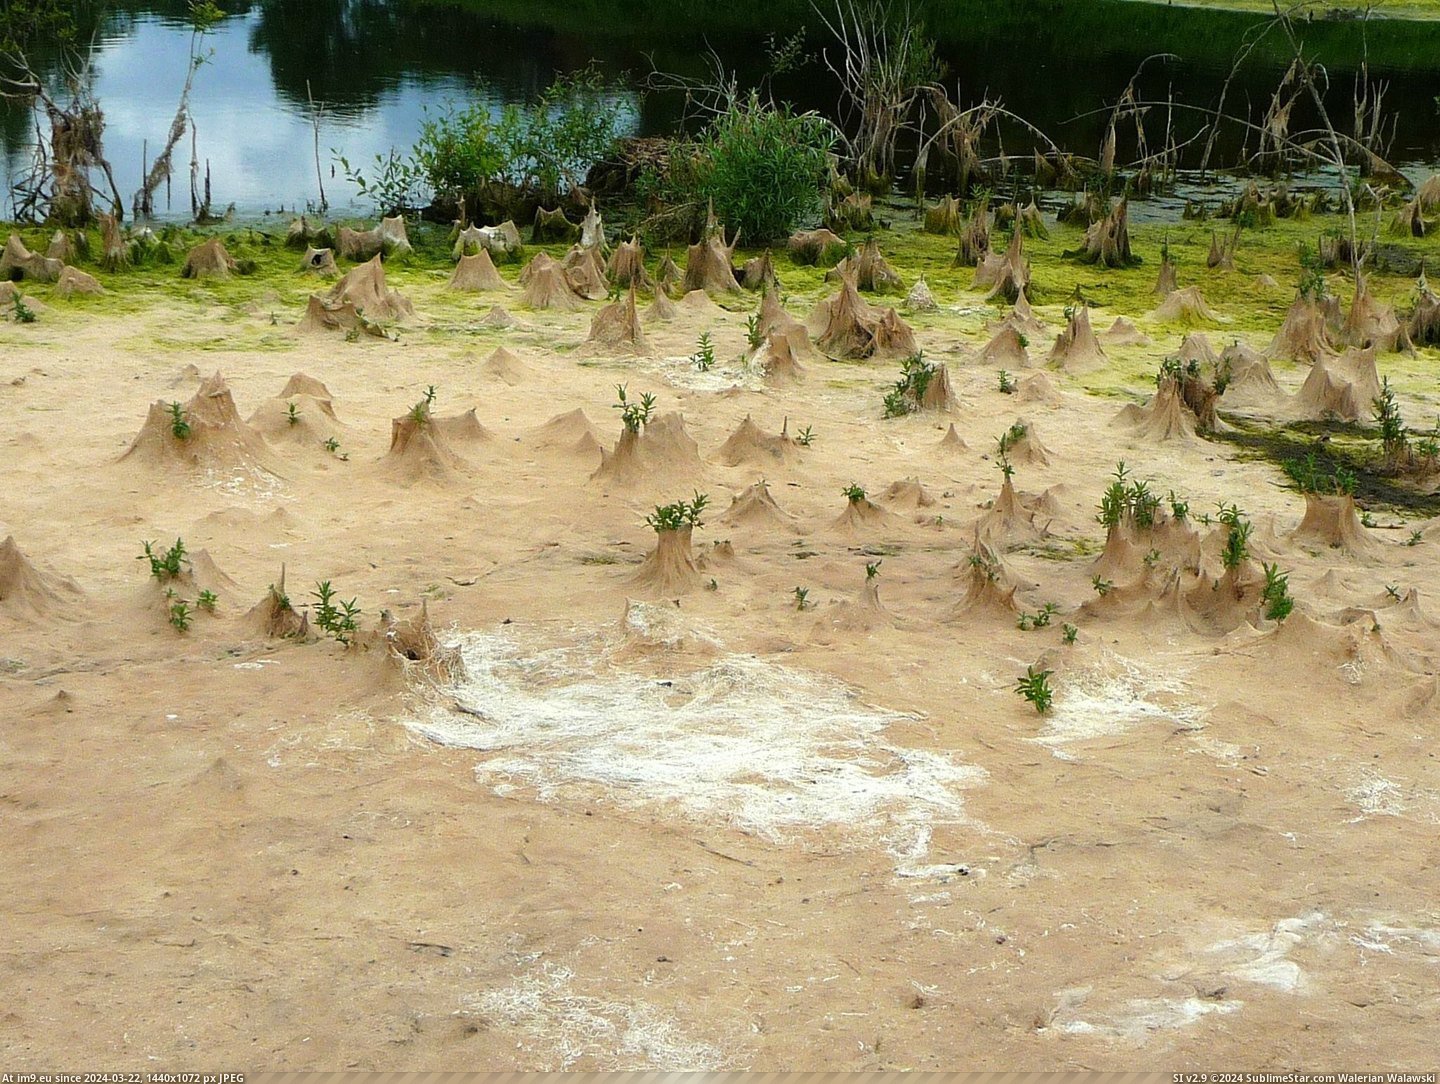 #Landscape #Edge #Dried #Pond #Alien [Mildlyinteresting] This dried-up pond edge looks like an alien landscape. 1 Pic. (Изображение из альбом My r/MILDLYINTERESTING favs))